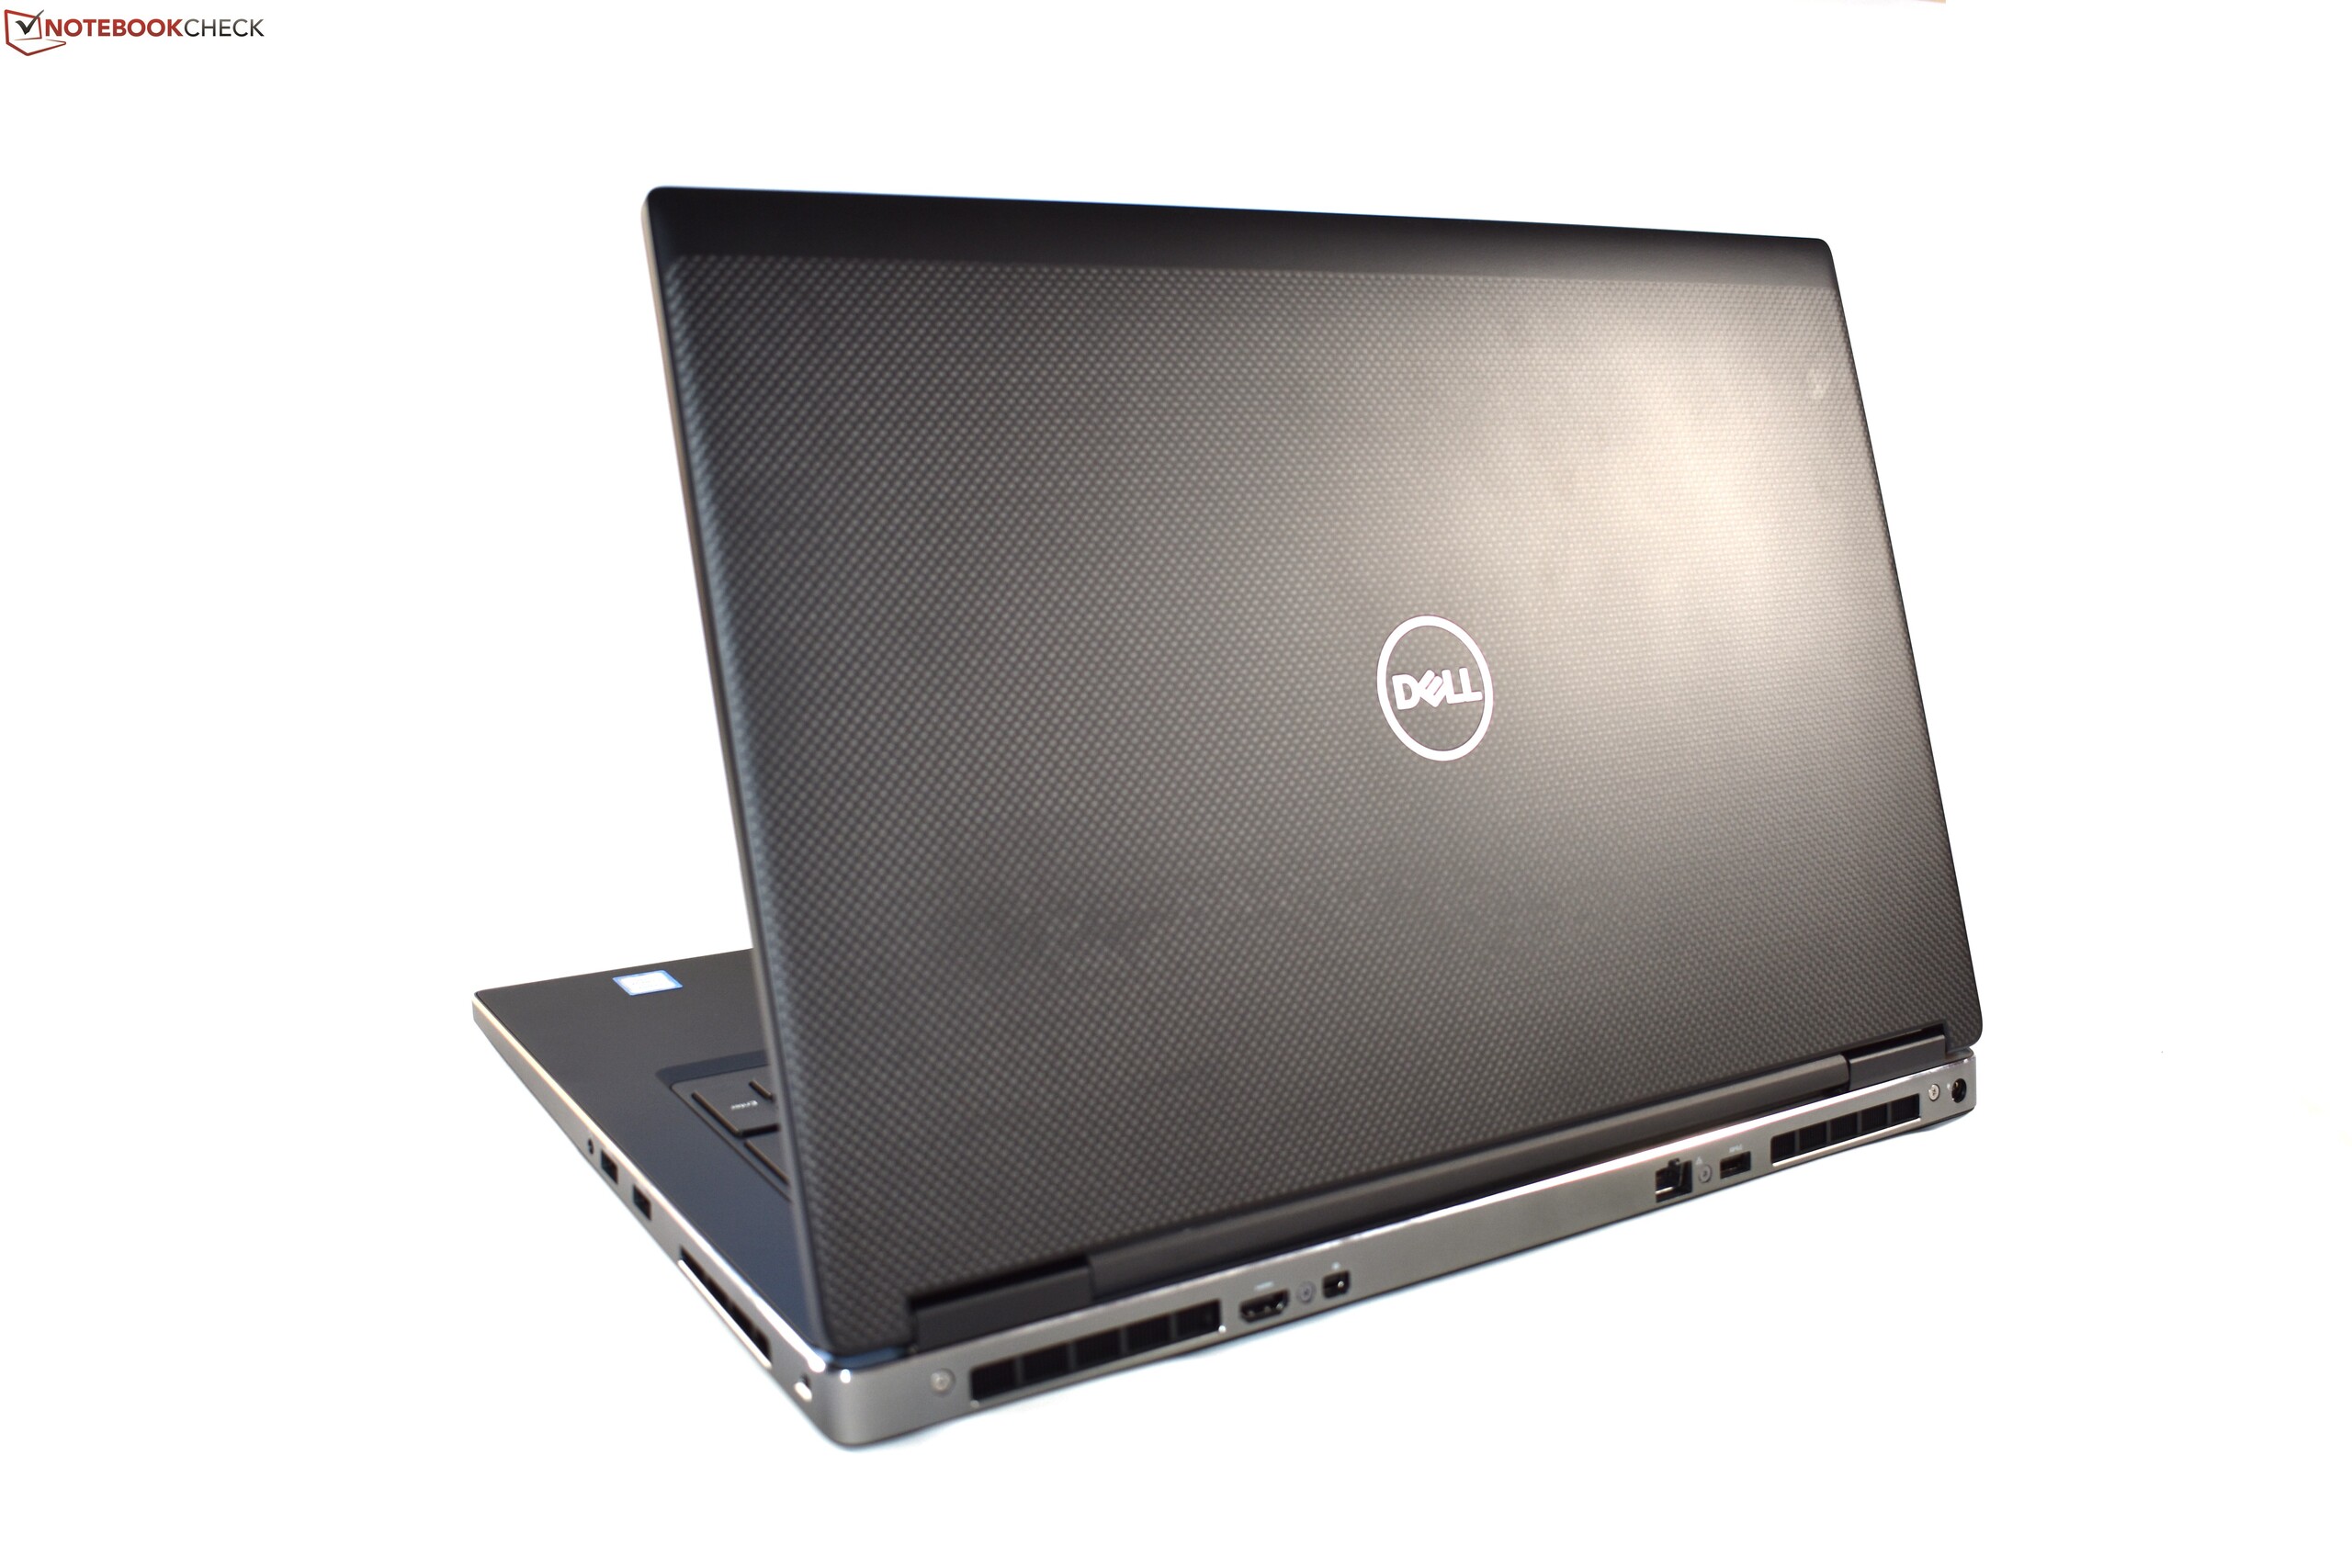 Dell Precision 7730 (Core i7-8850H, Quadro P3200, FHD) Workstation Review -   Reviews